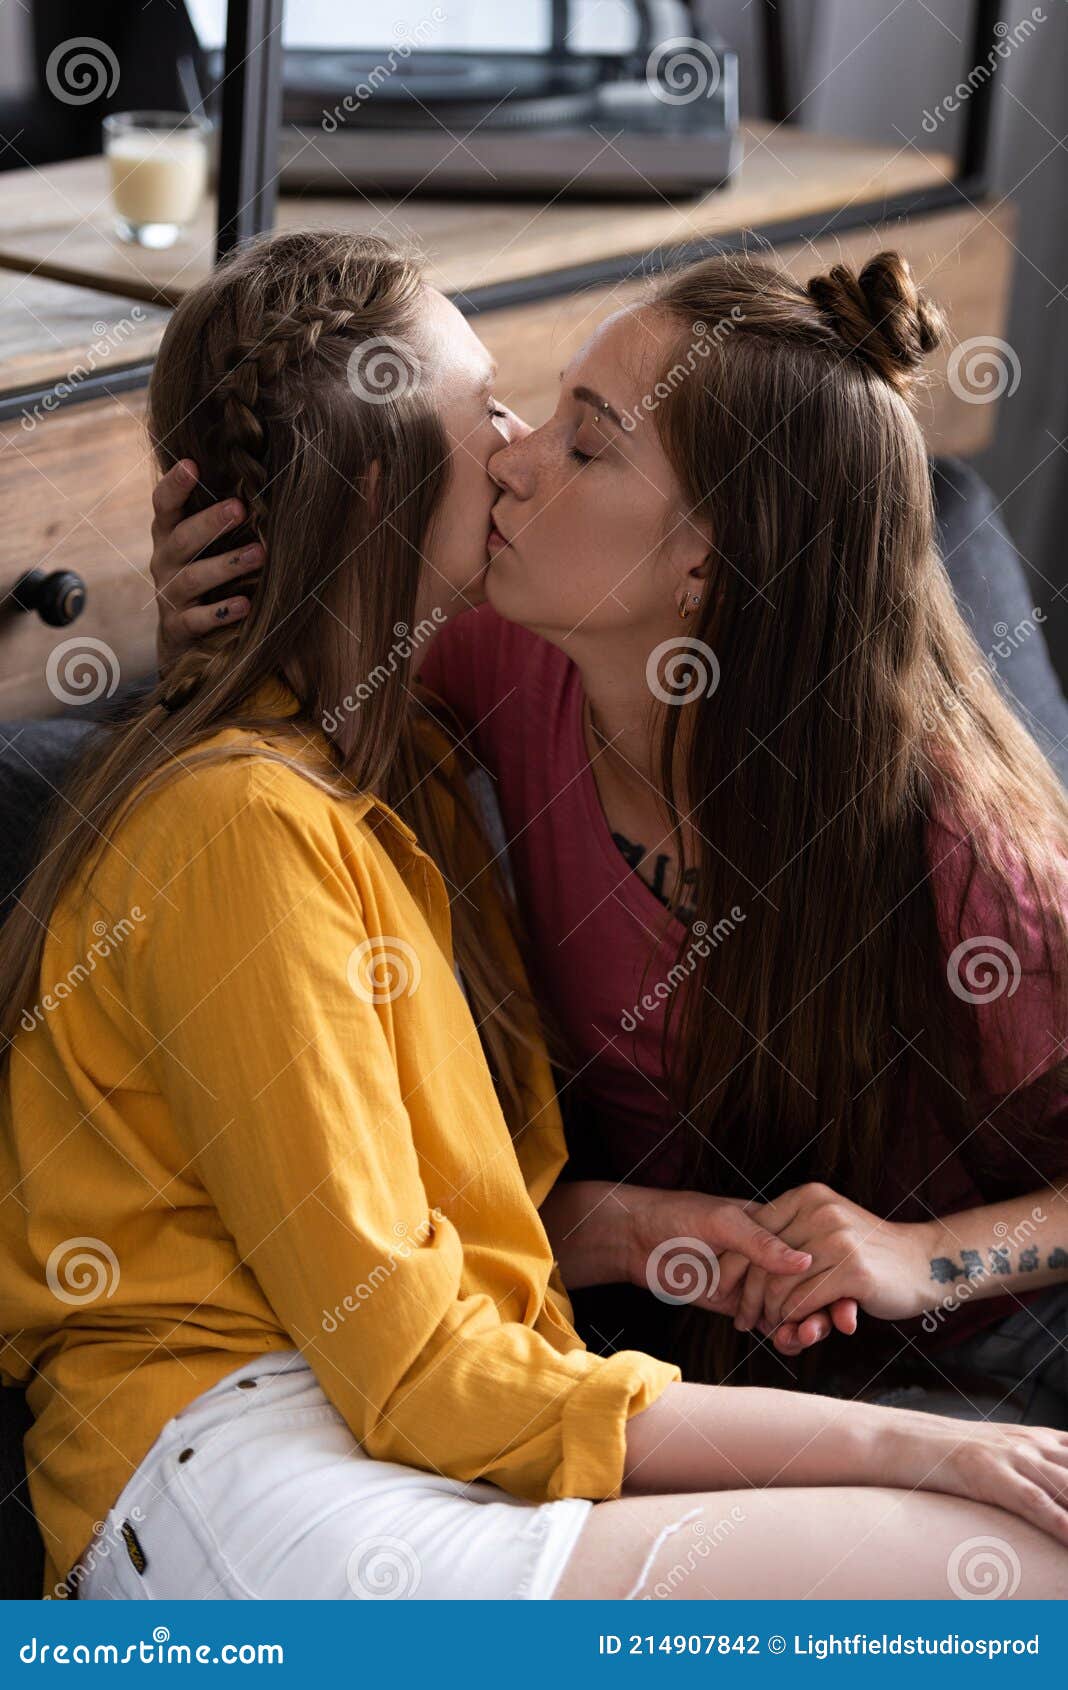 david whytock share teen lesbian kissing videos photos